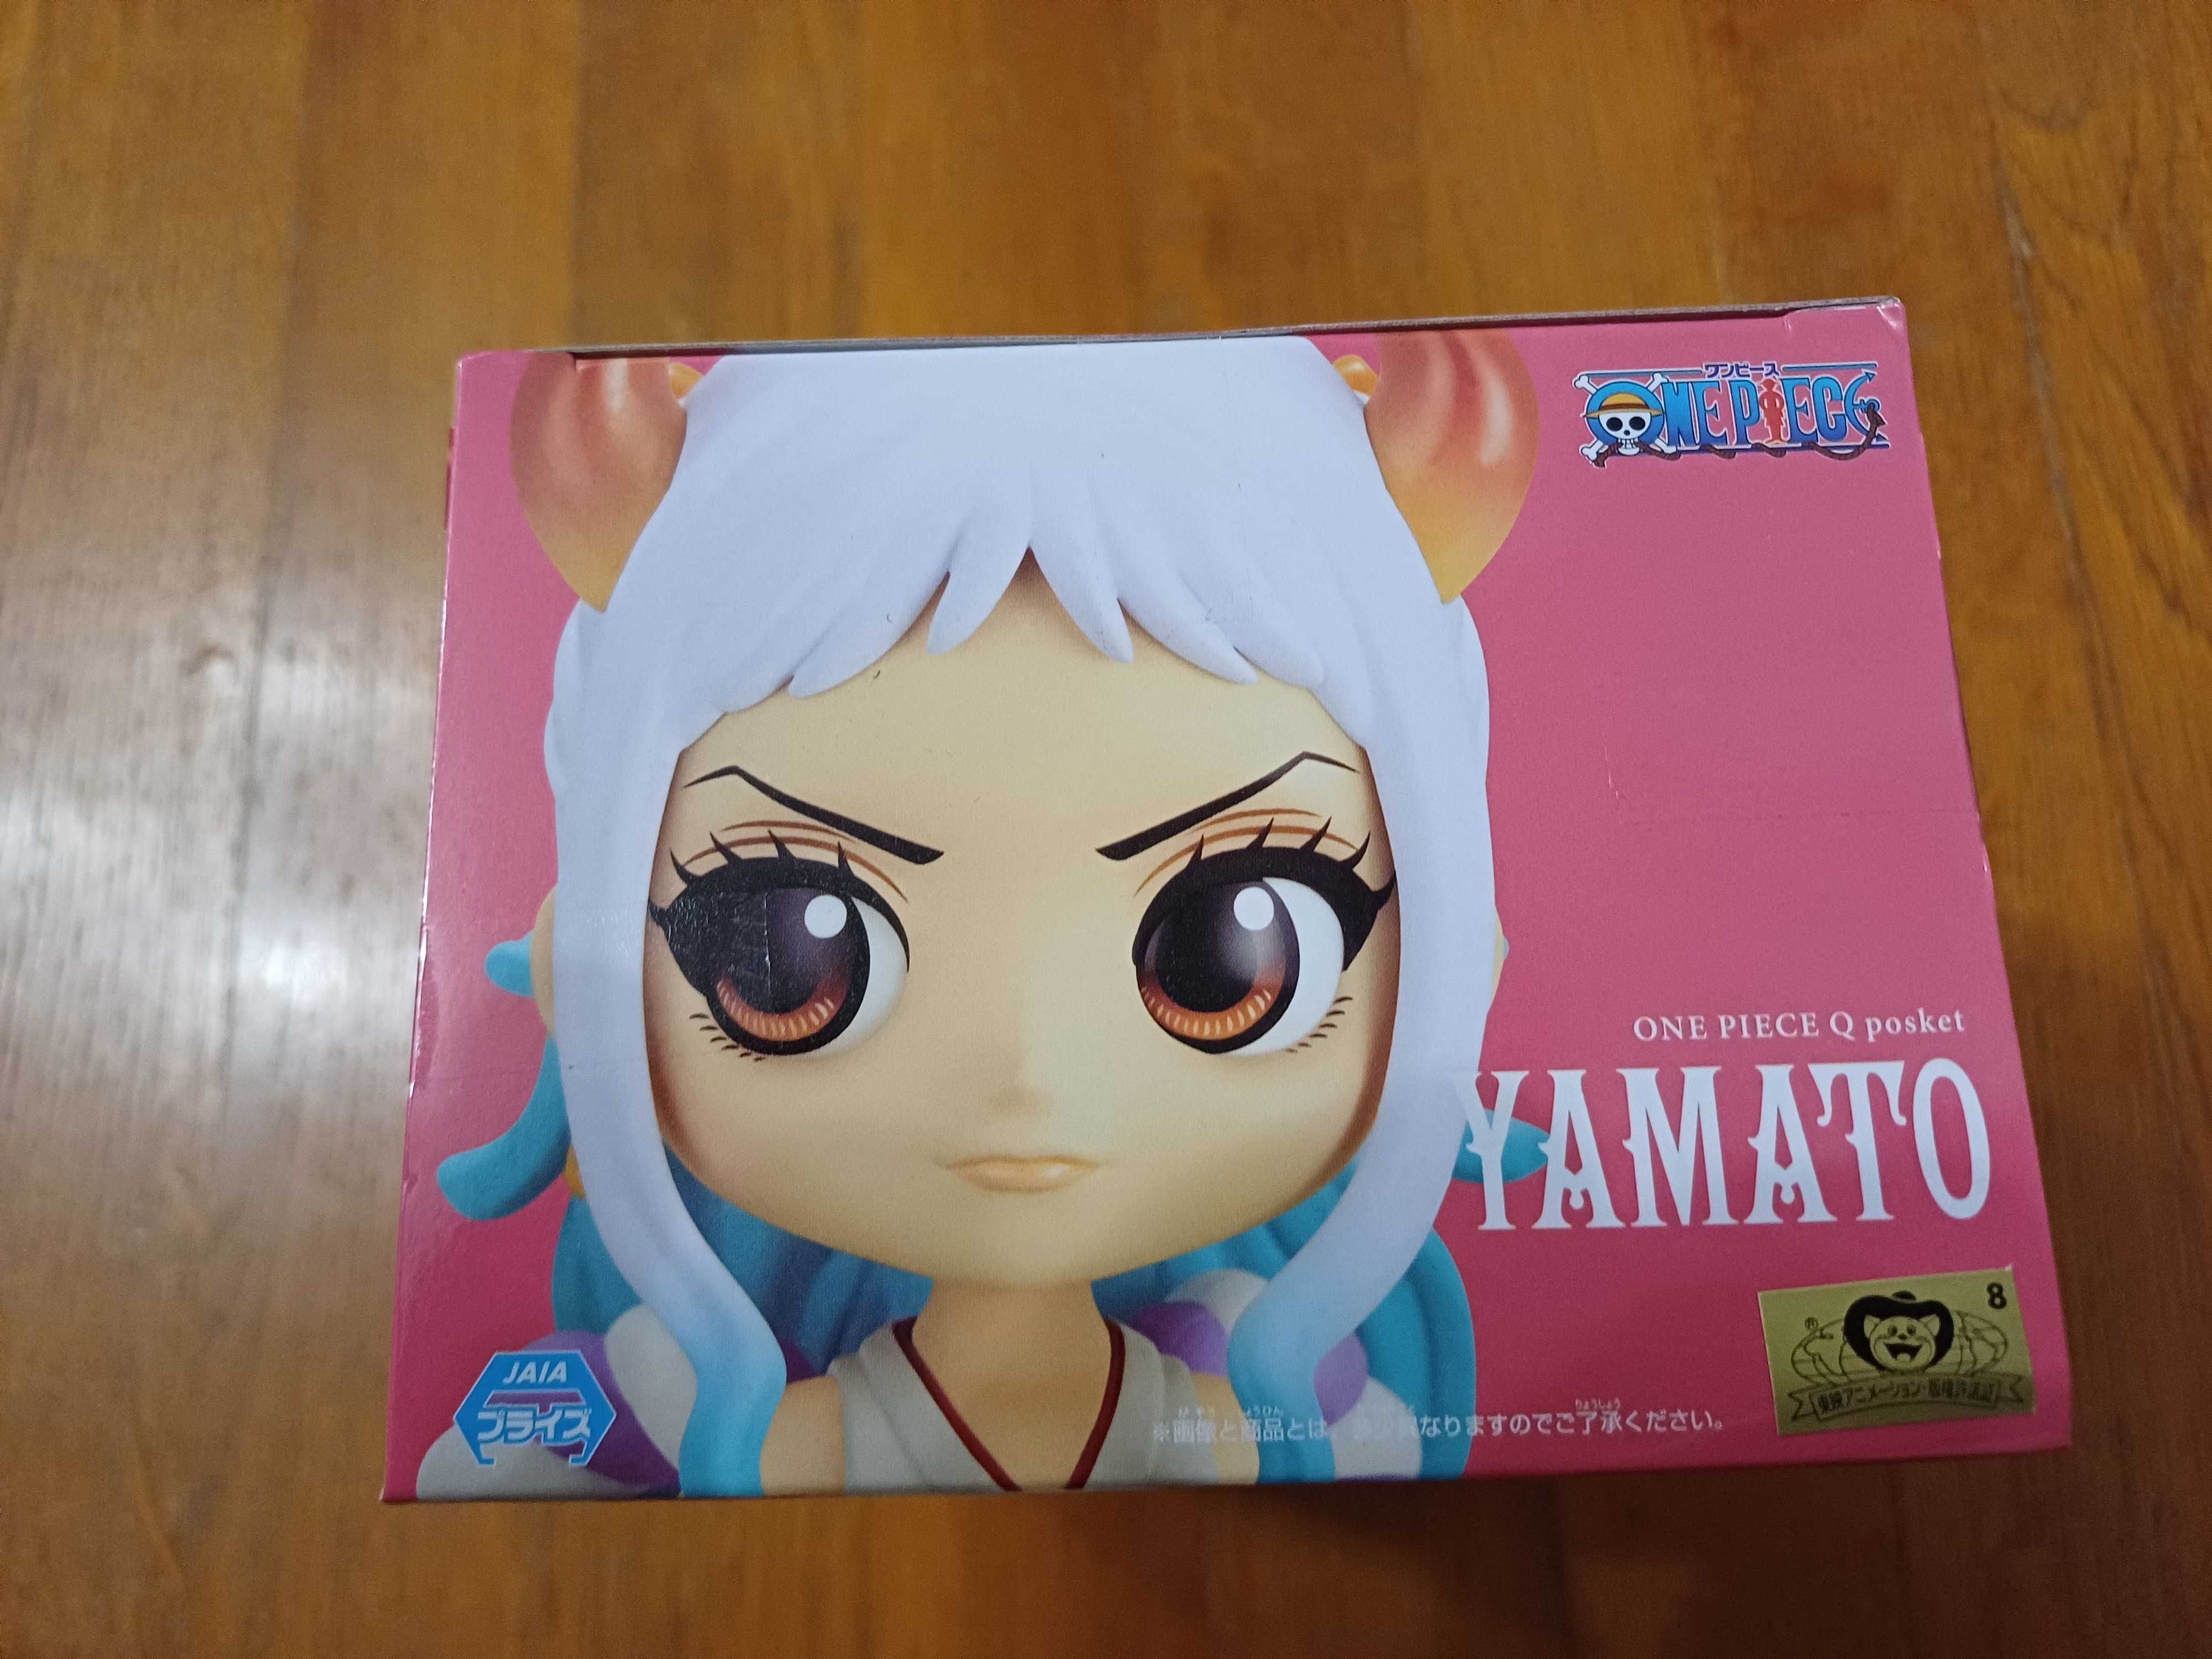 Yamato QPosket One Piece Figurka Manga Anime